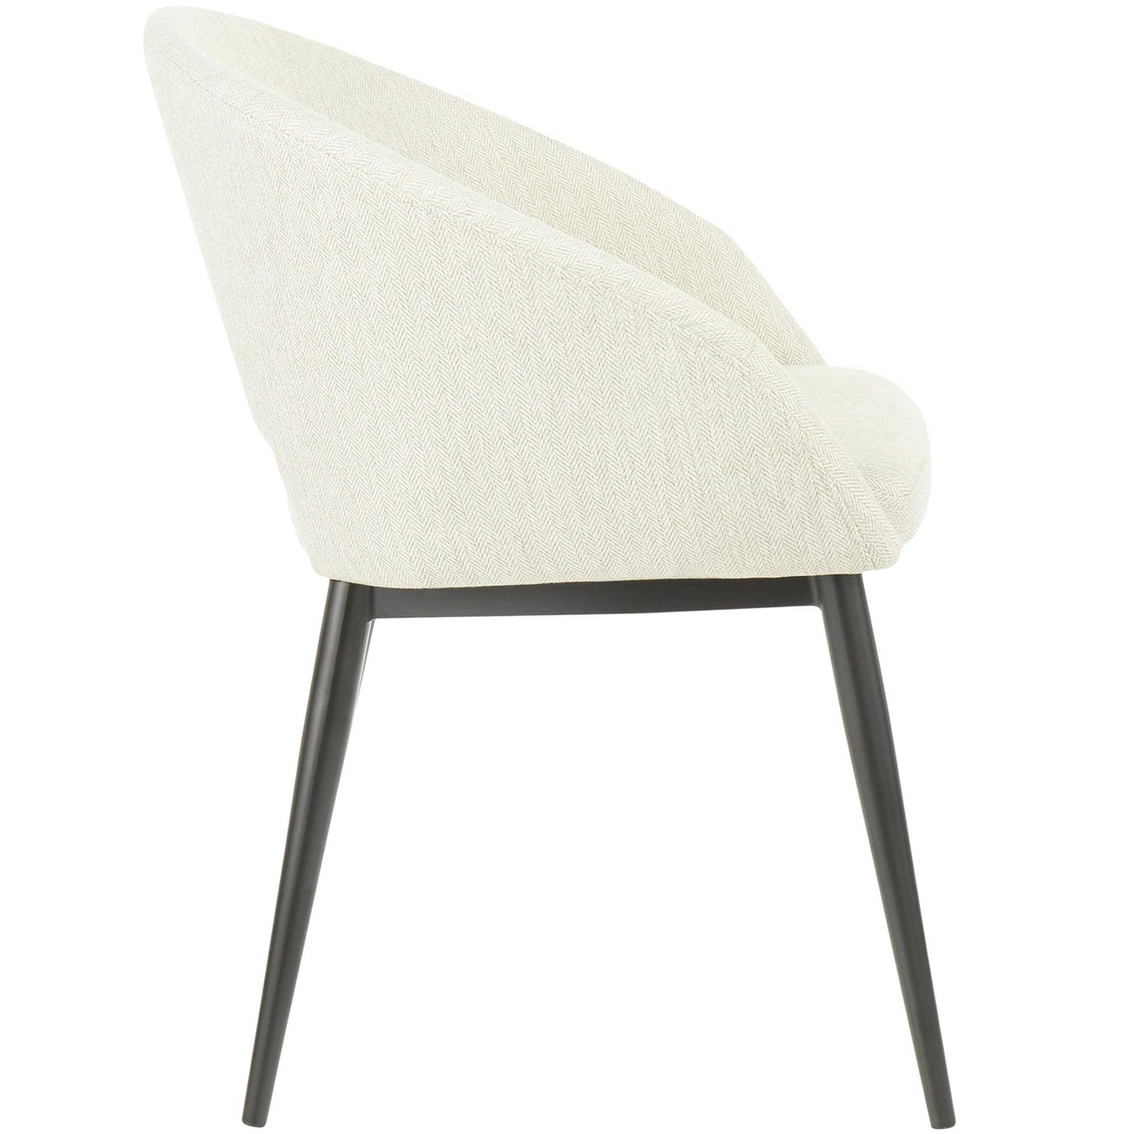 LumiSource Renee Chair - Image 4 of 5